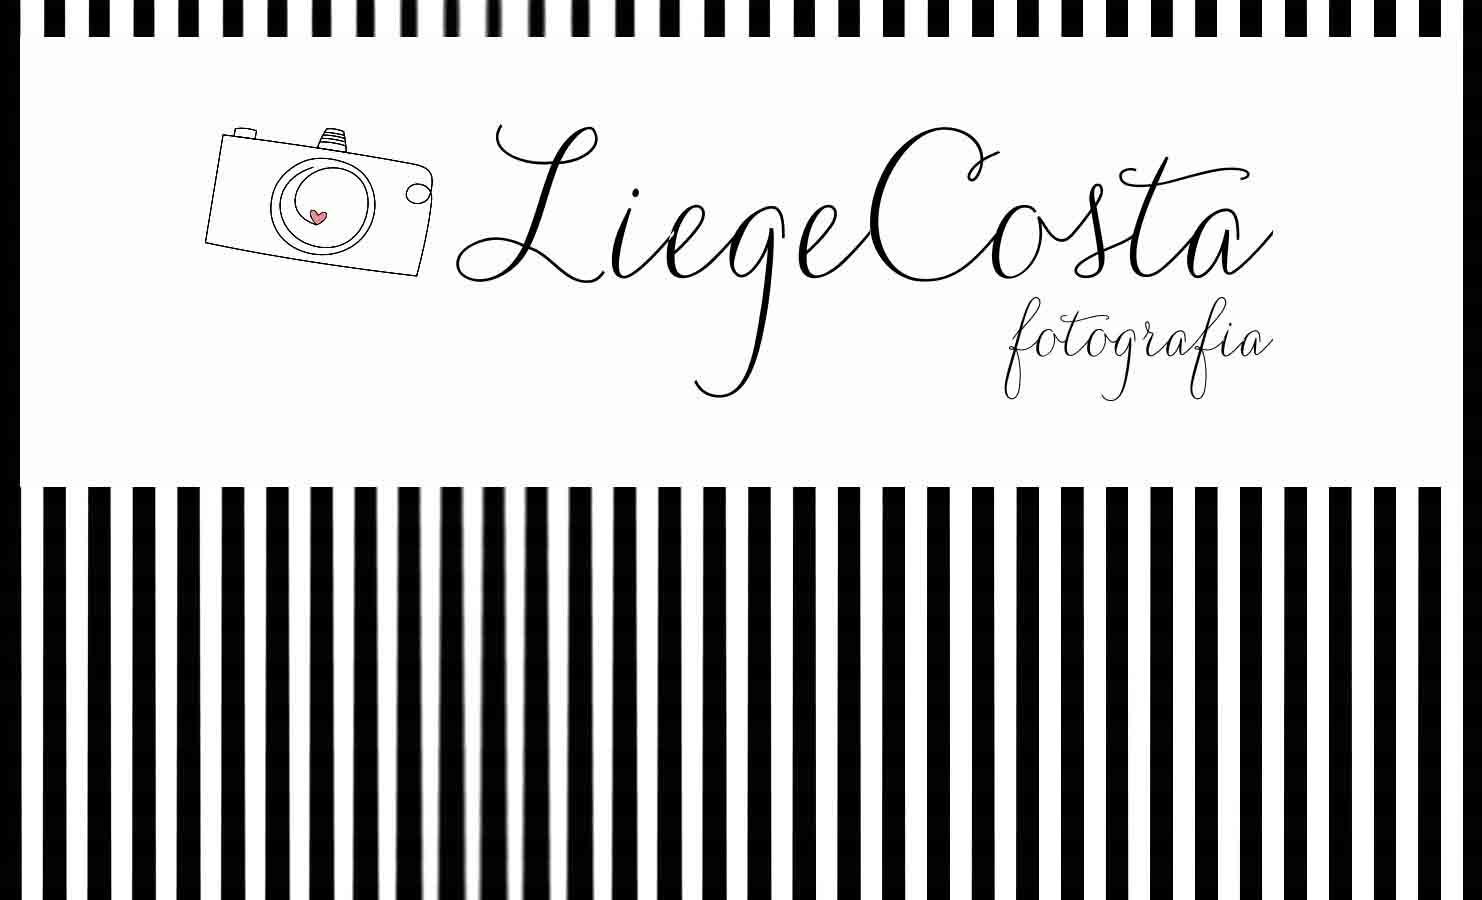 Liege Costa Fotografia logo